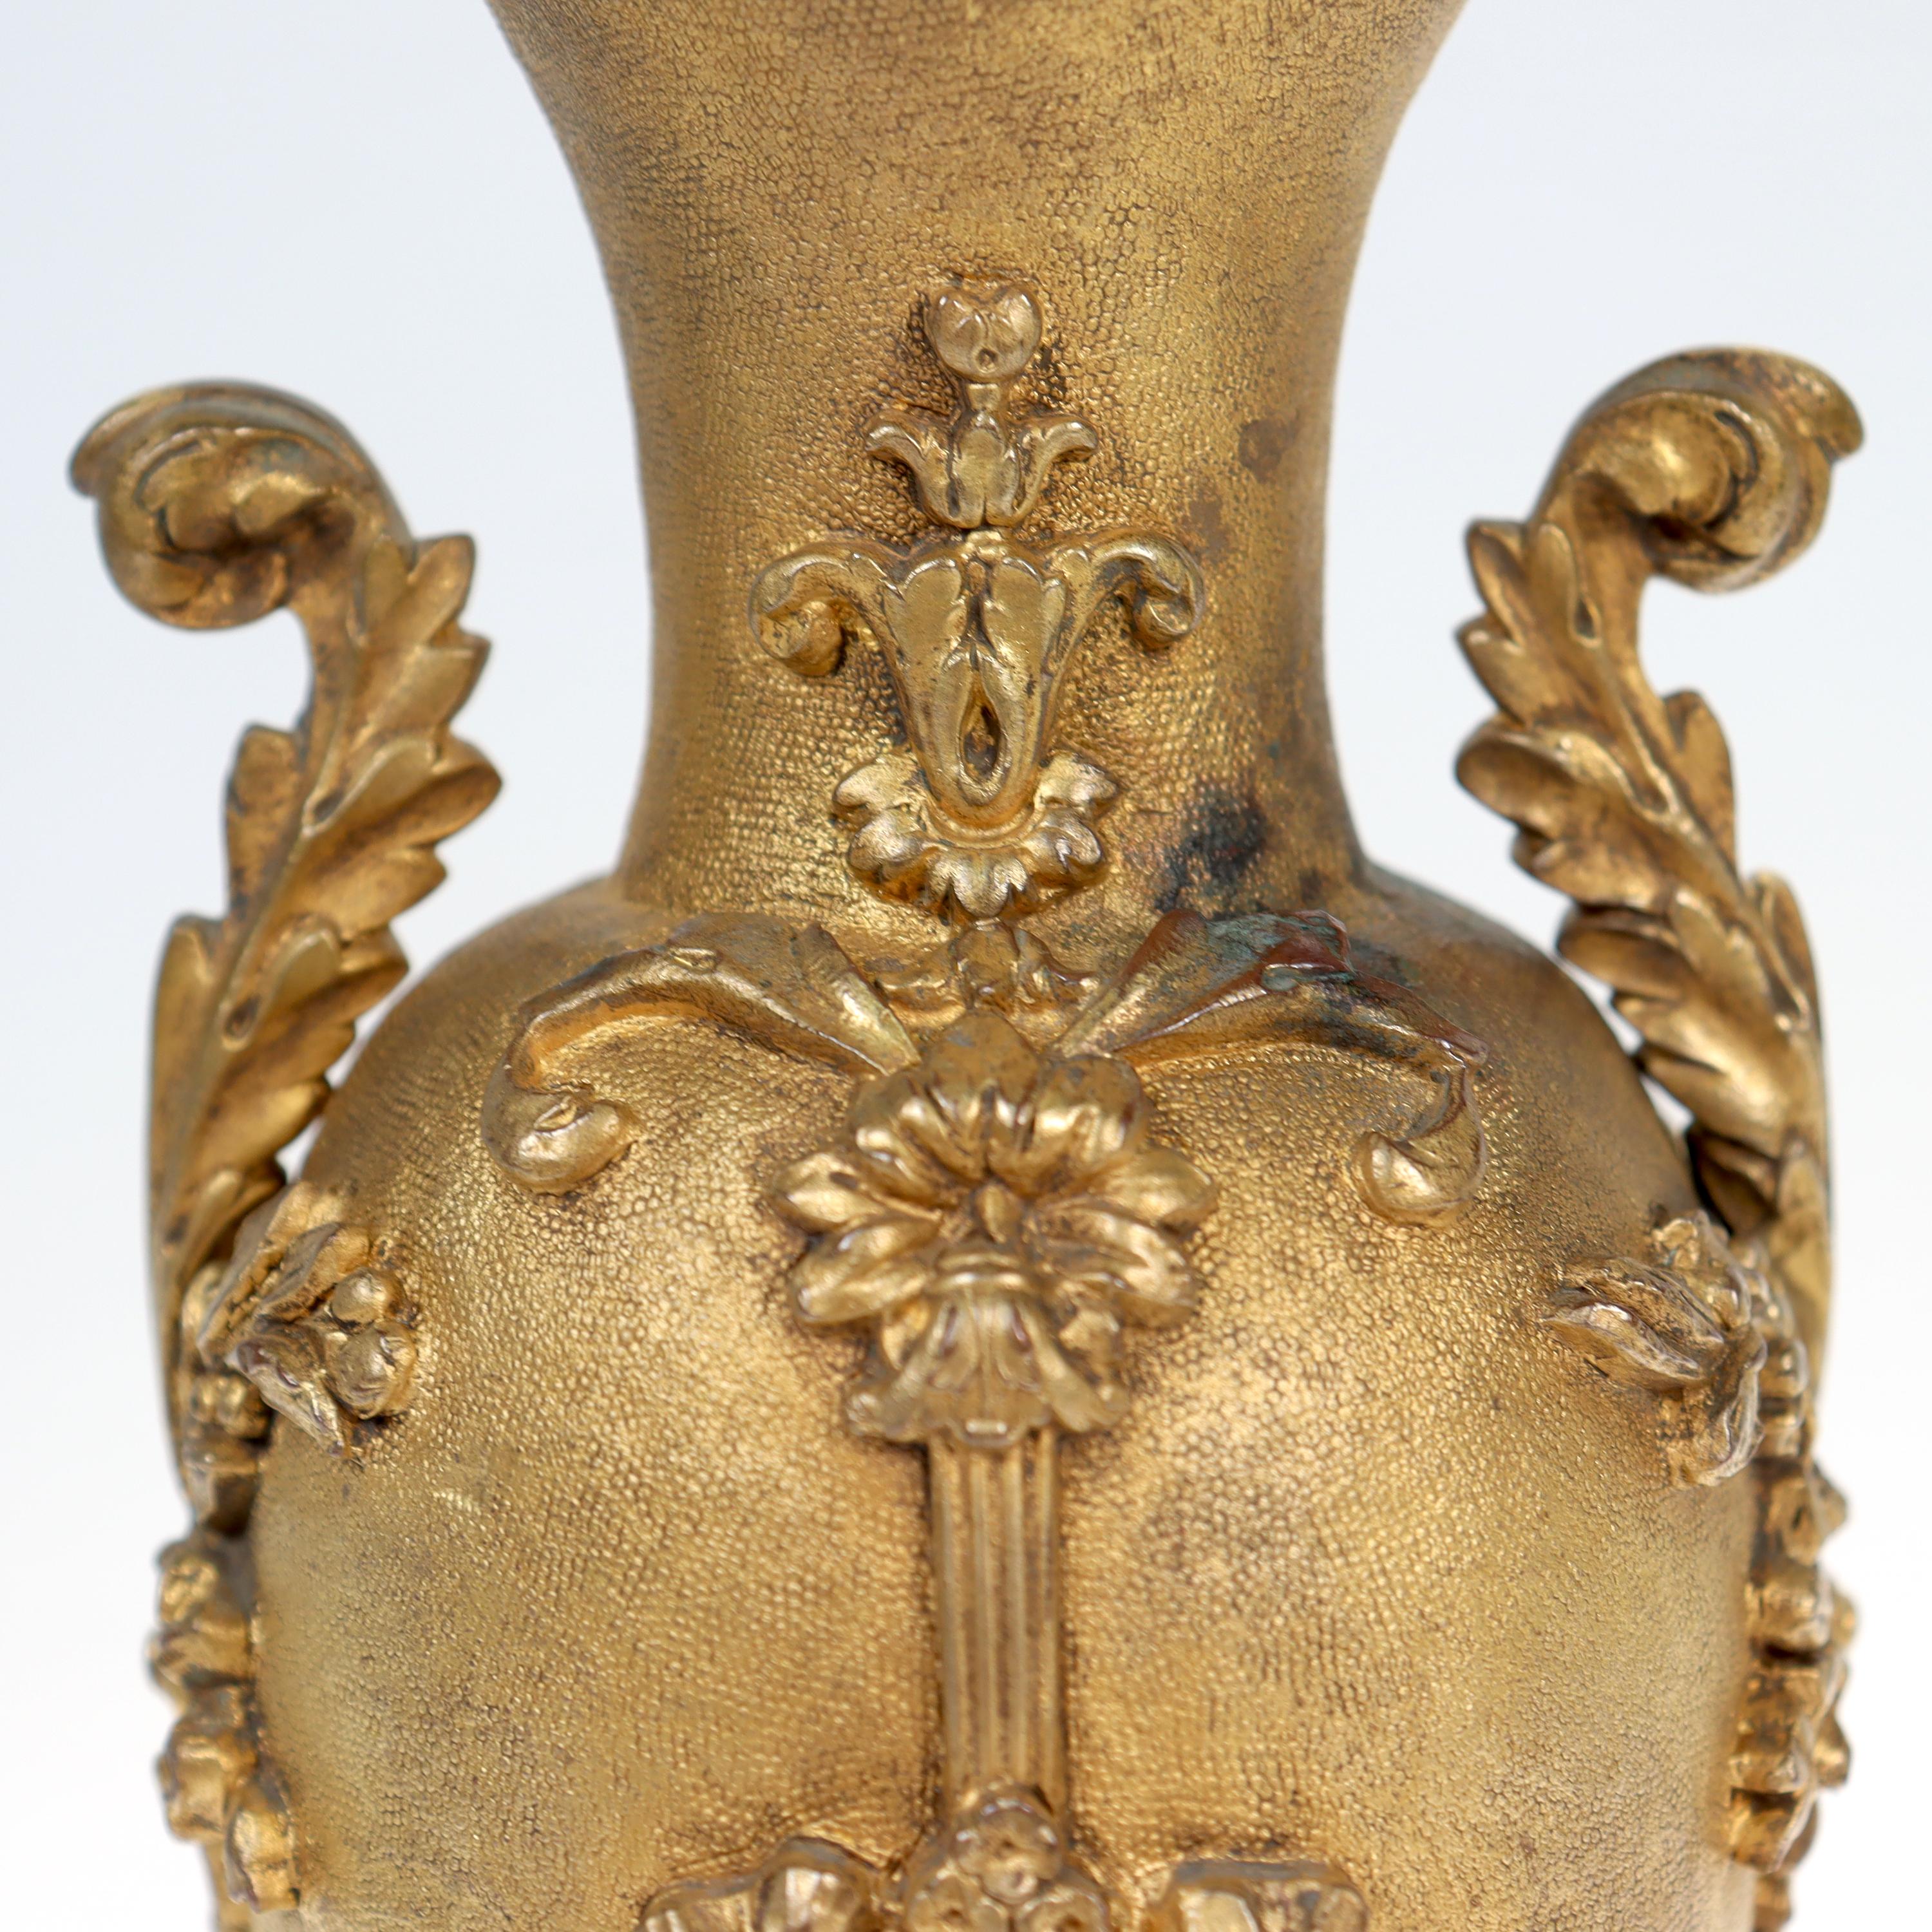 Antique Second Empire French Doré Gilt Bronze Vases or Urns For Sale 4